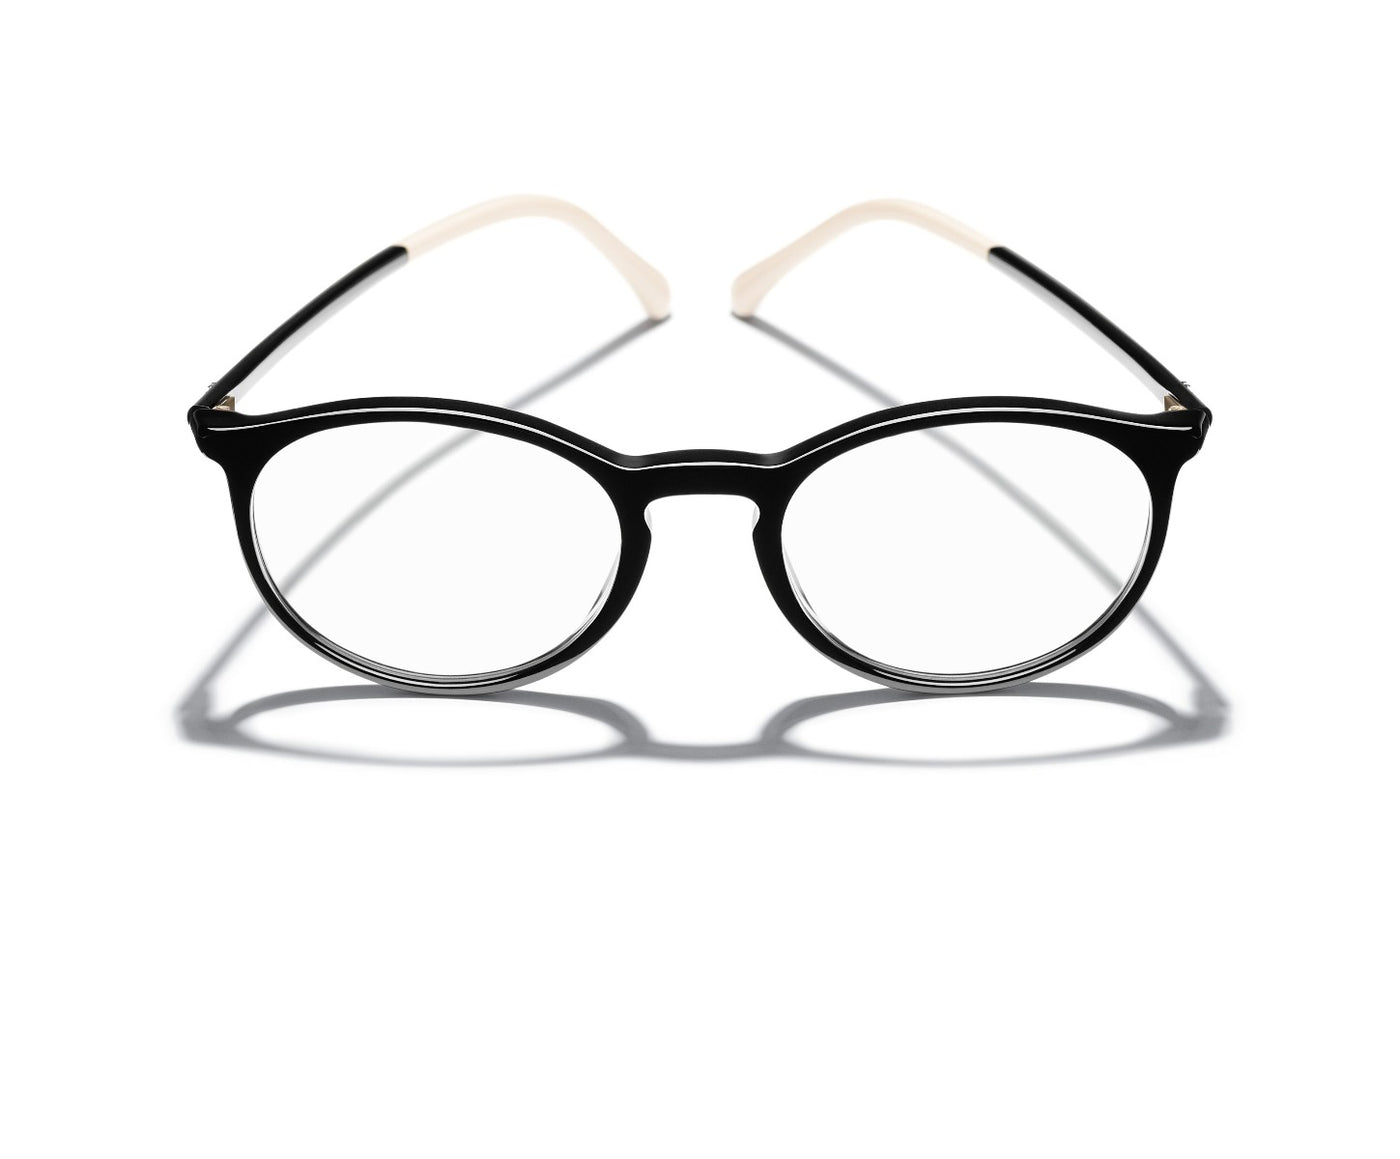 Chanel CH3282 Women's Black Frame Clear Lens Round Eyeglasses